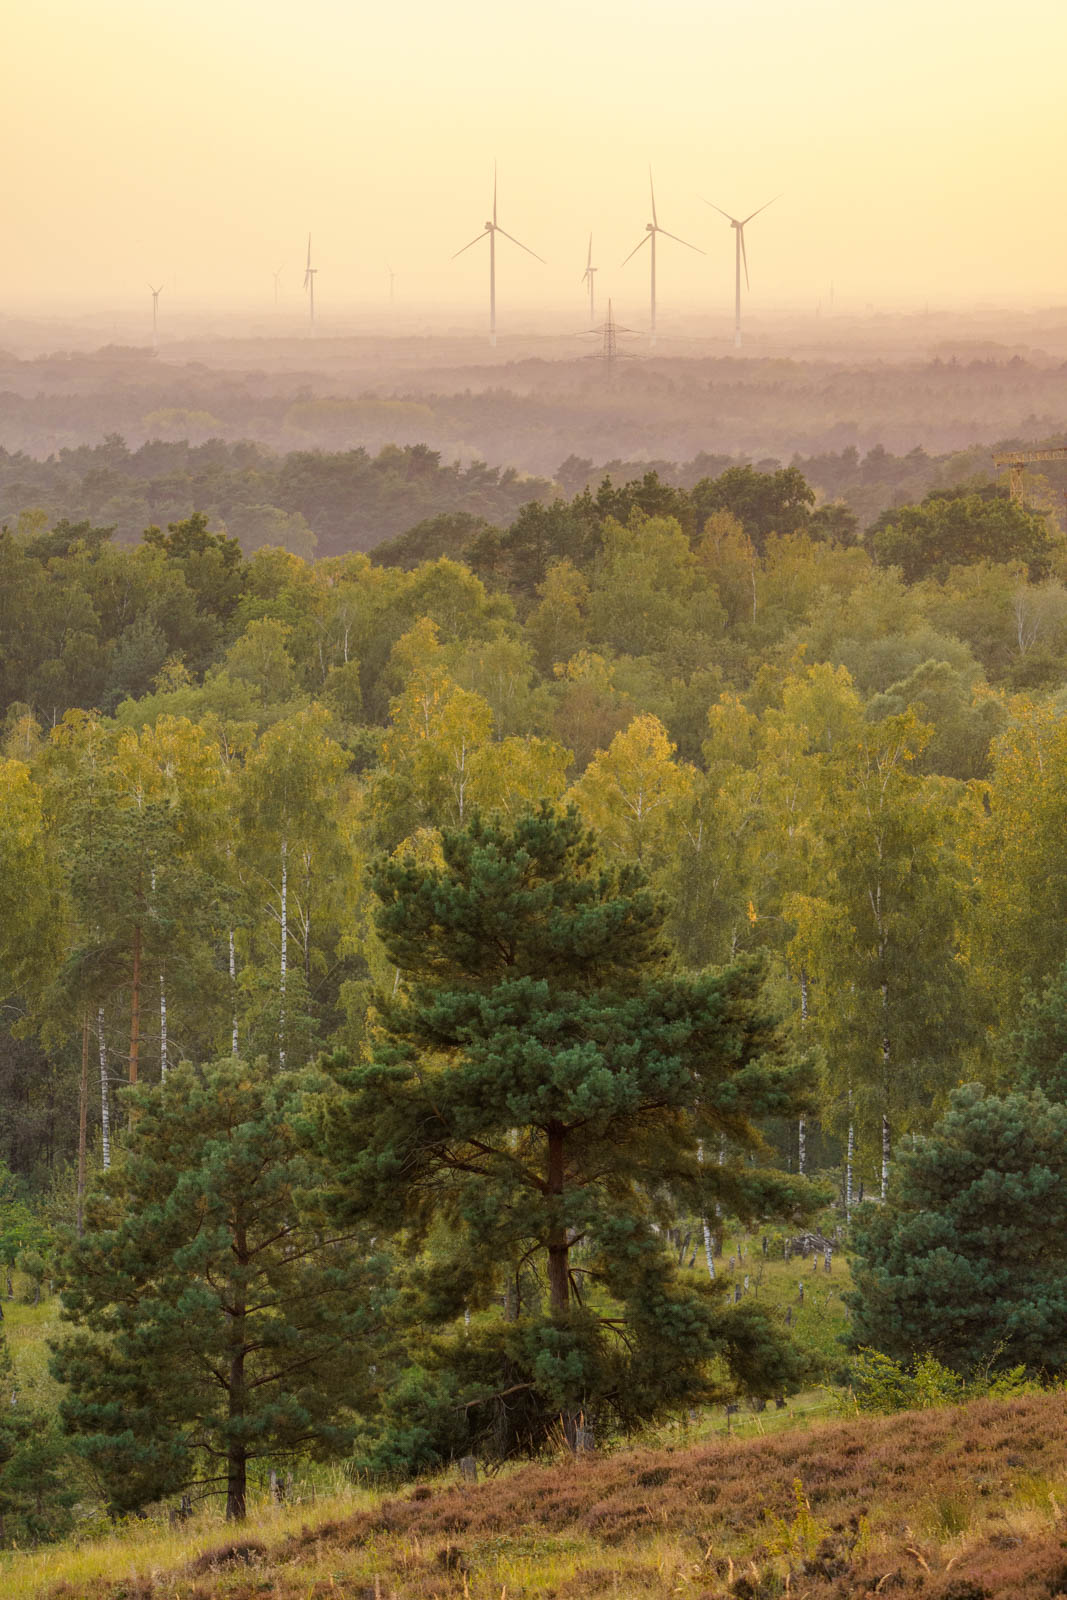 Wind turbines in the Teutoburg Forest at dusk in September 2020 (Oerlinghausen, Germany).